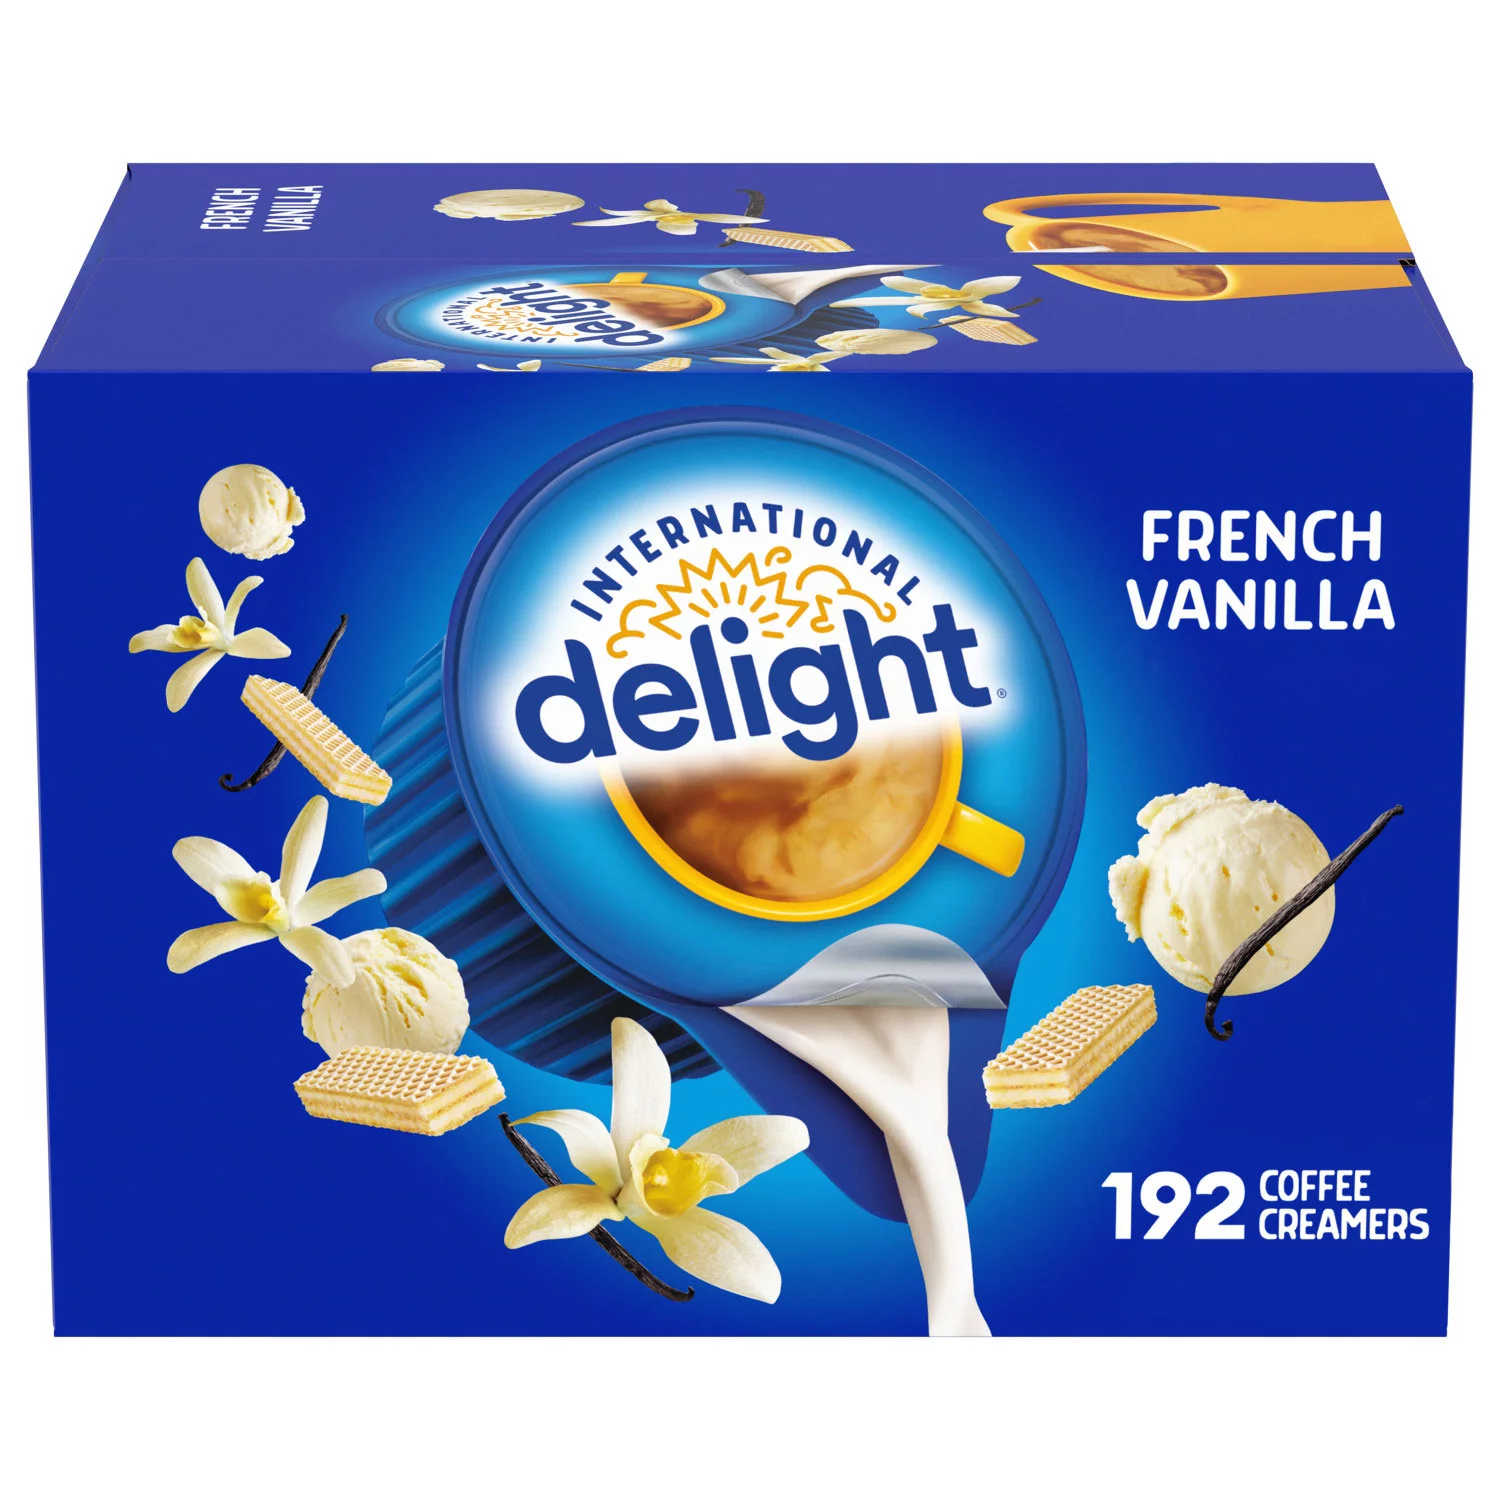 International Delight French Vanilla Creamer Singles (192 ct.)